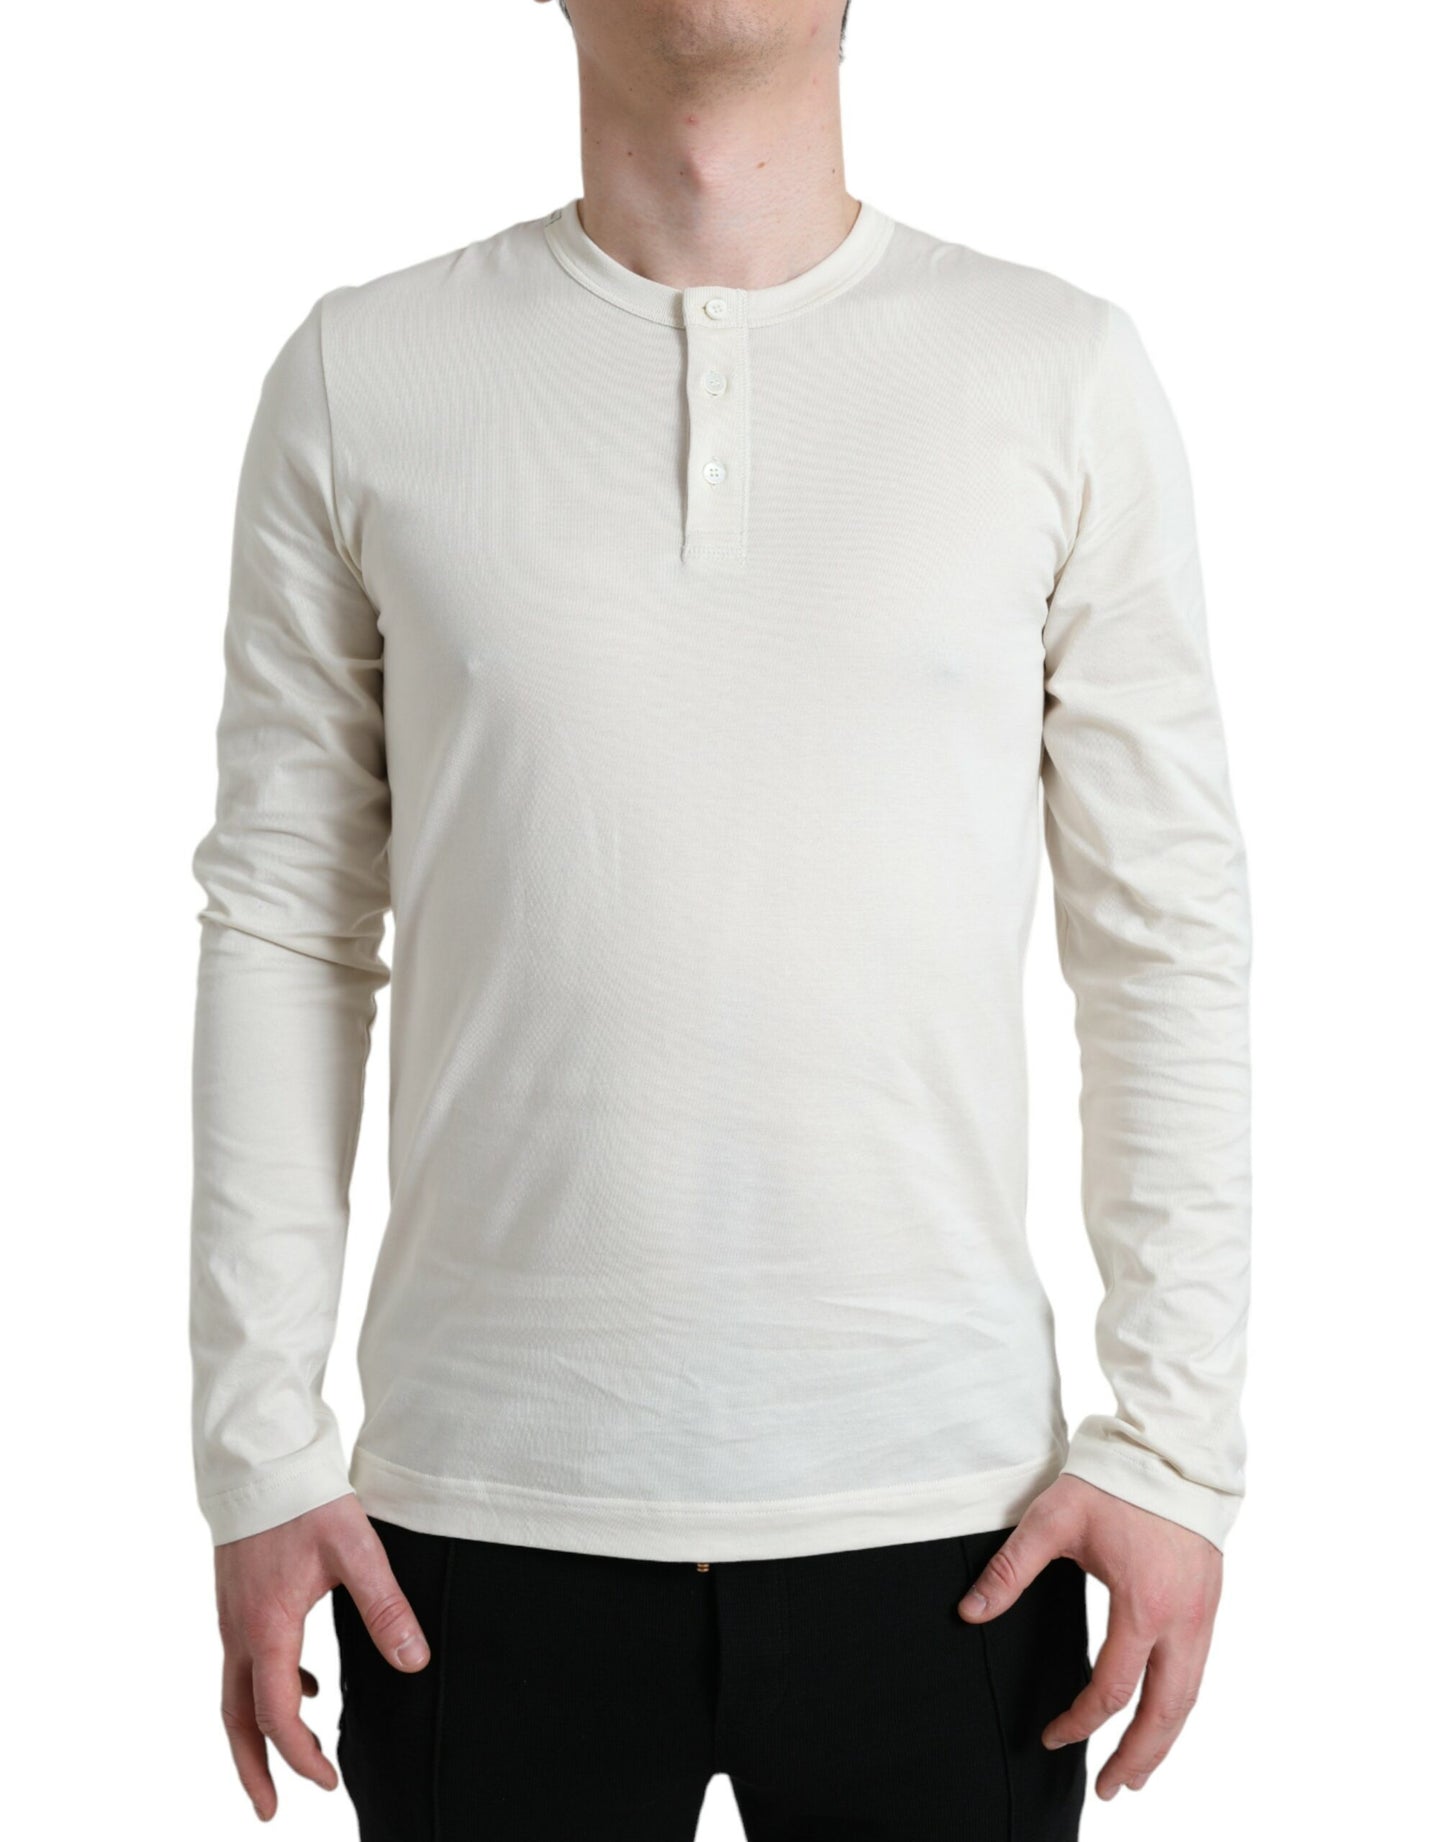 Elegant Off White Cotton Sweater